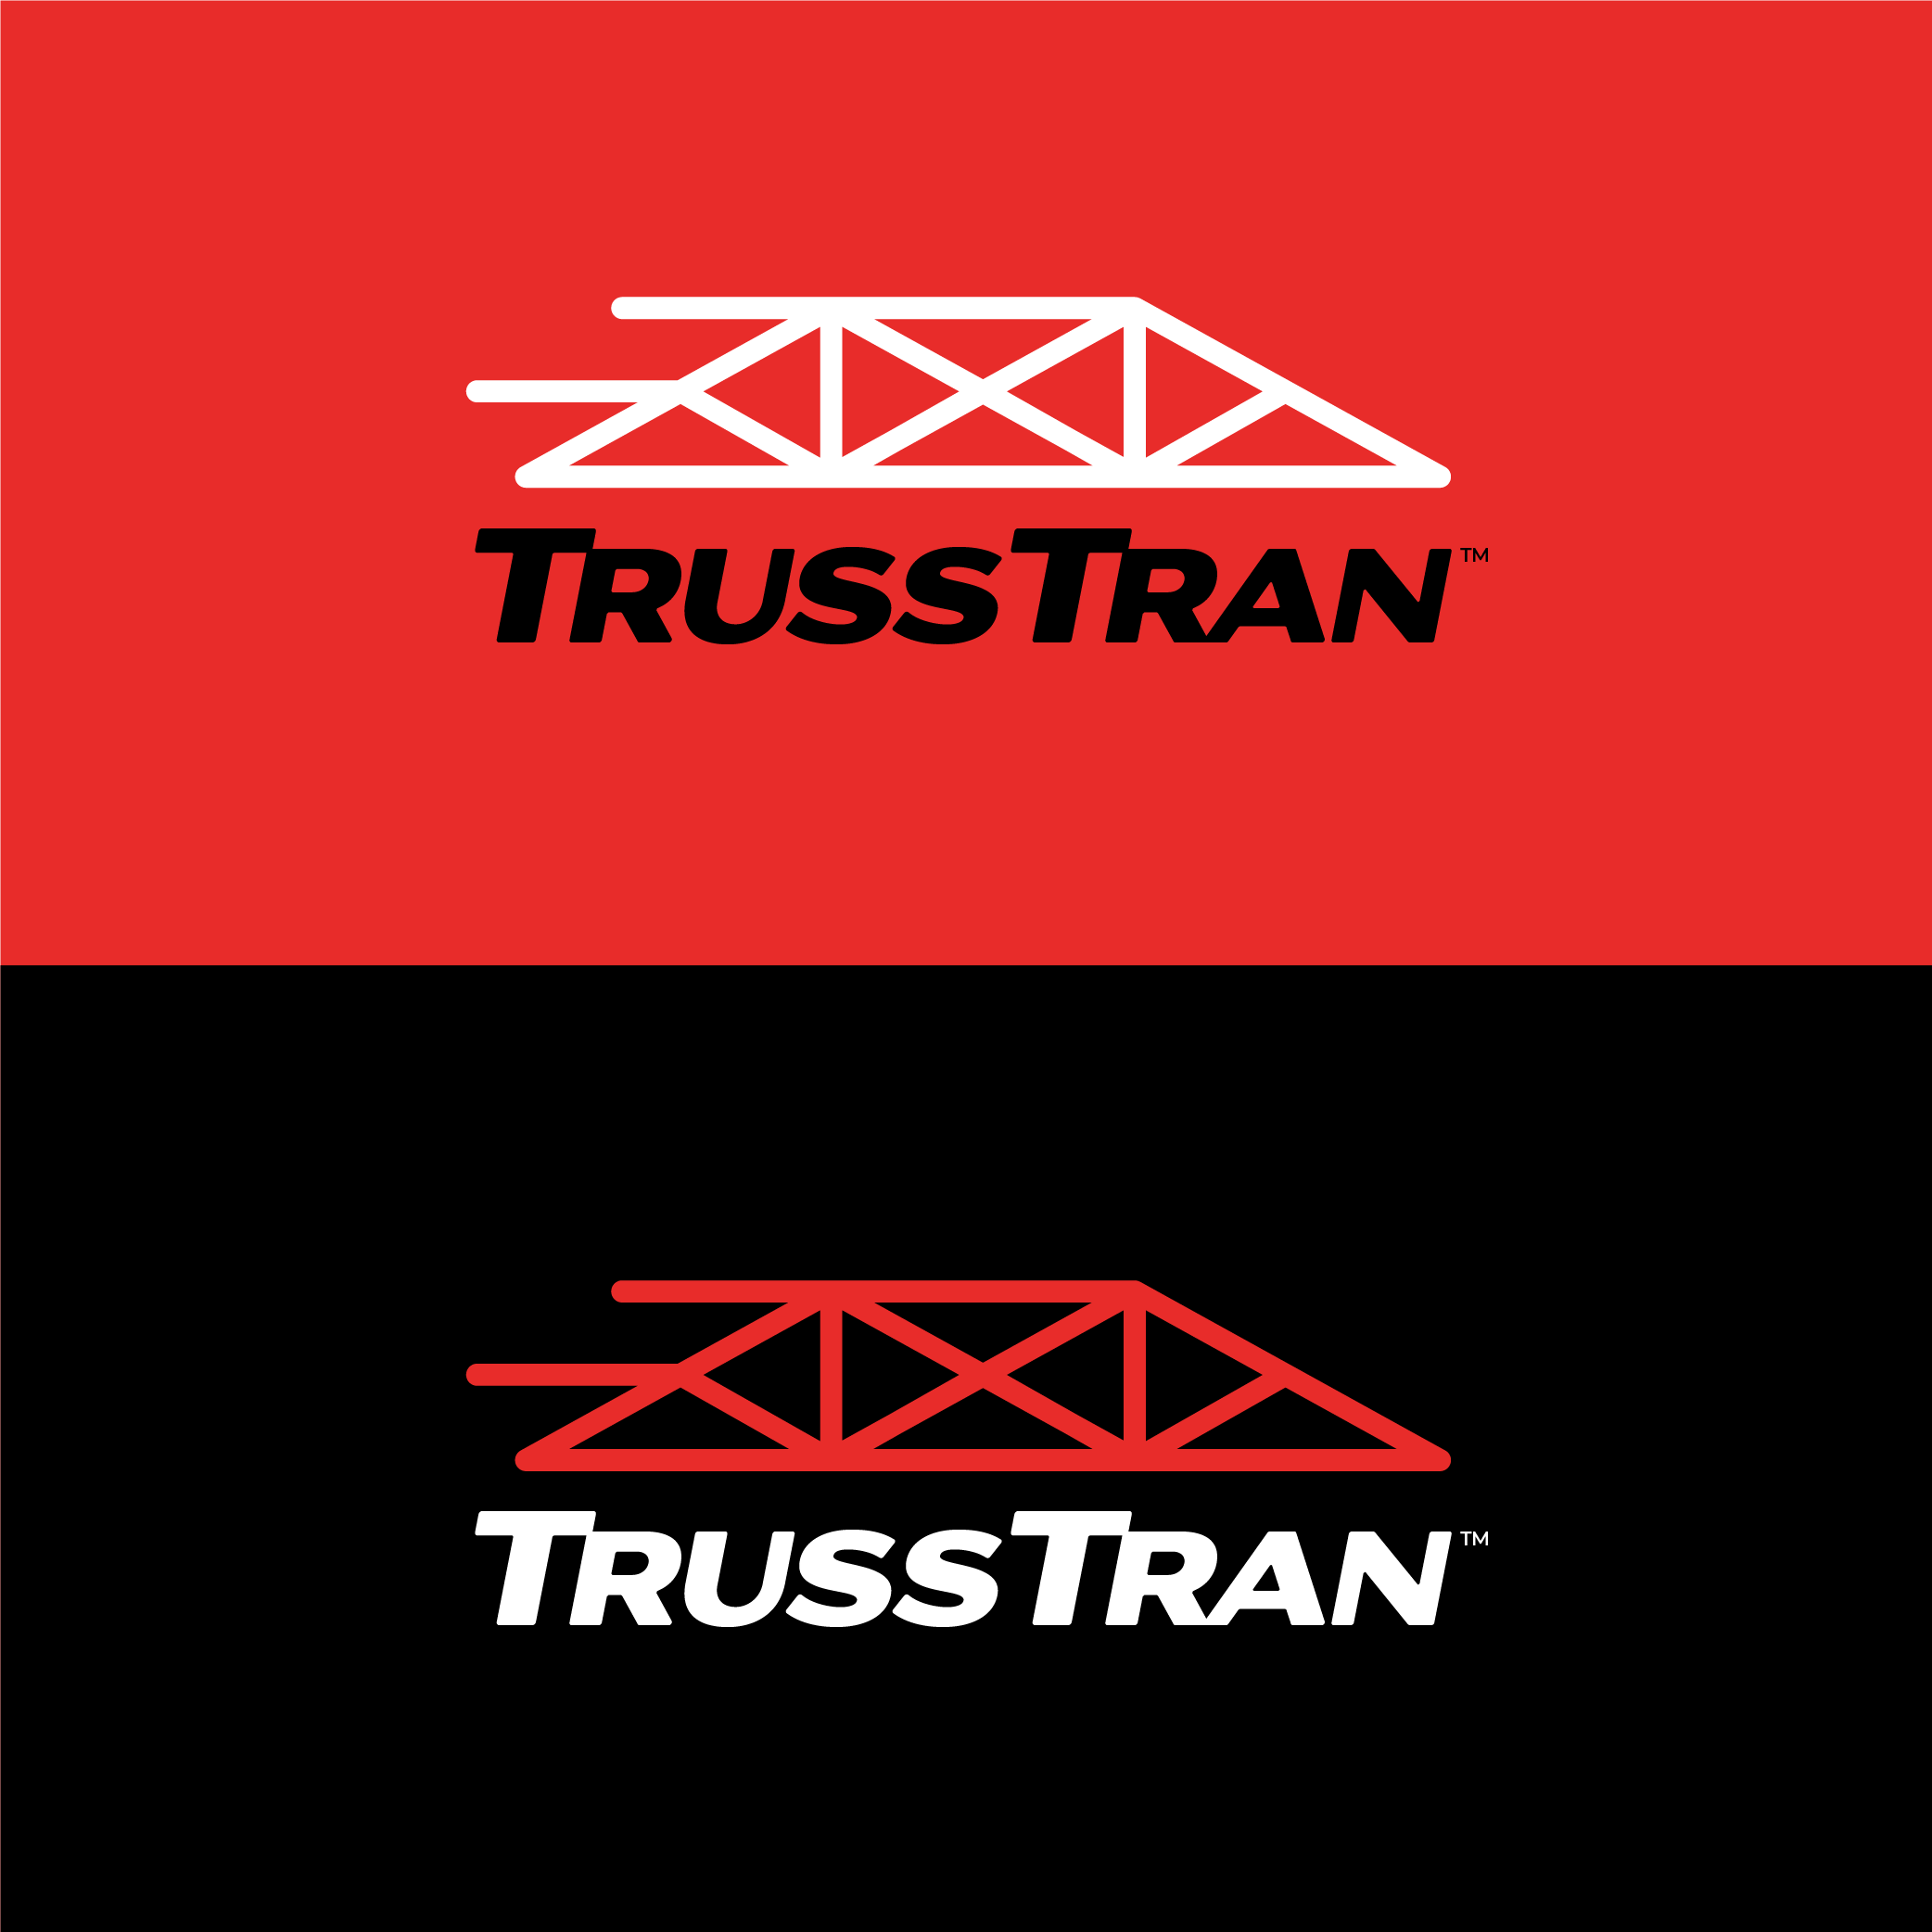 TrussTran-logo-red-black